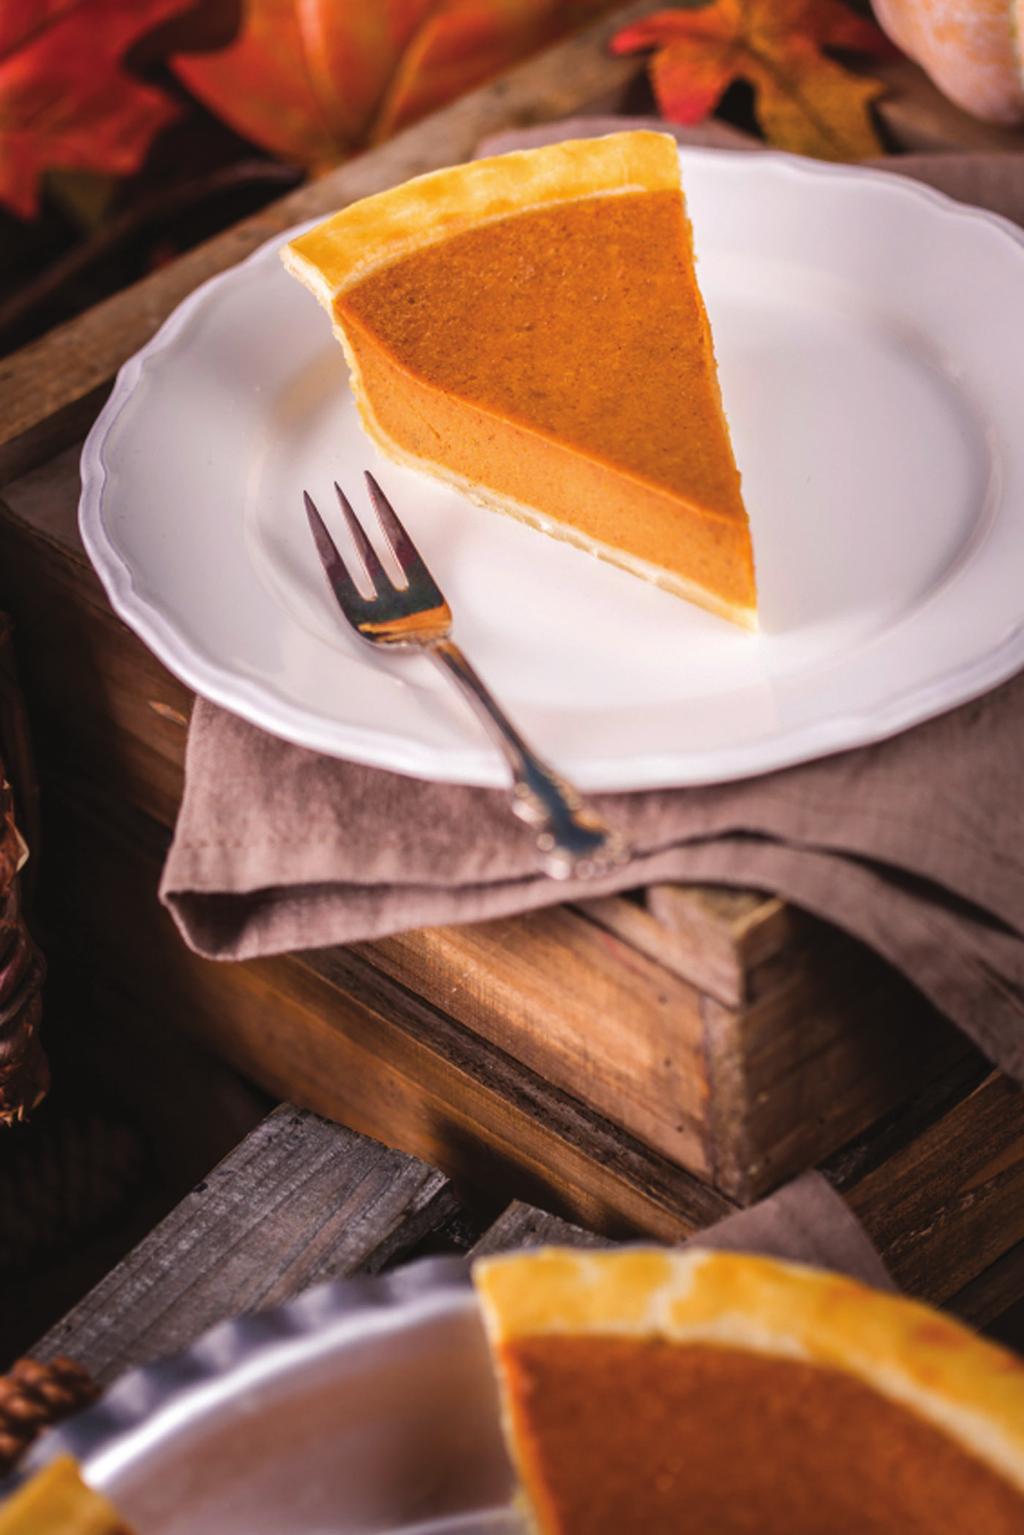 November 2015 vegan pumpkin pie serves: 8 nutrition - per slice: calories: 195 fat: 5 g saturated fat: 3 g cholesterol: 0 mg sodium: 125 mg total carbohydrates: 33 g fiber: 2 g sugar: 20g protein: 3